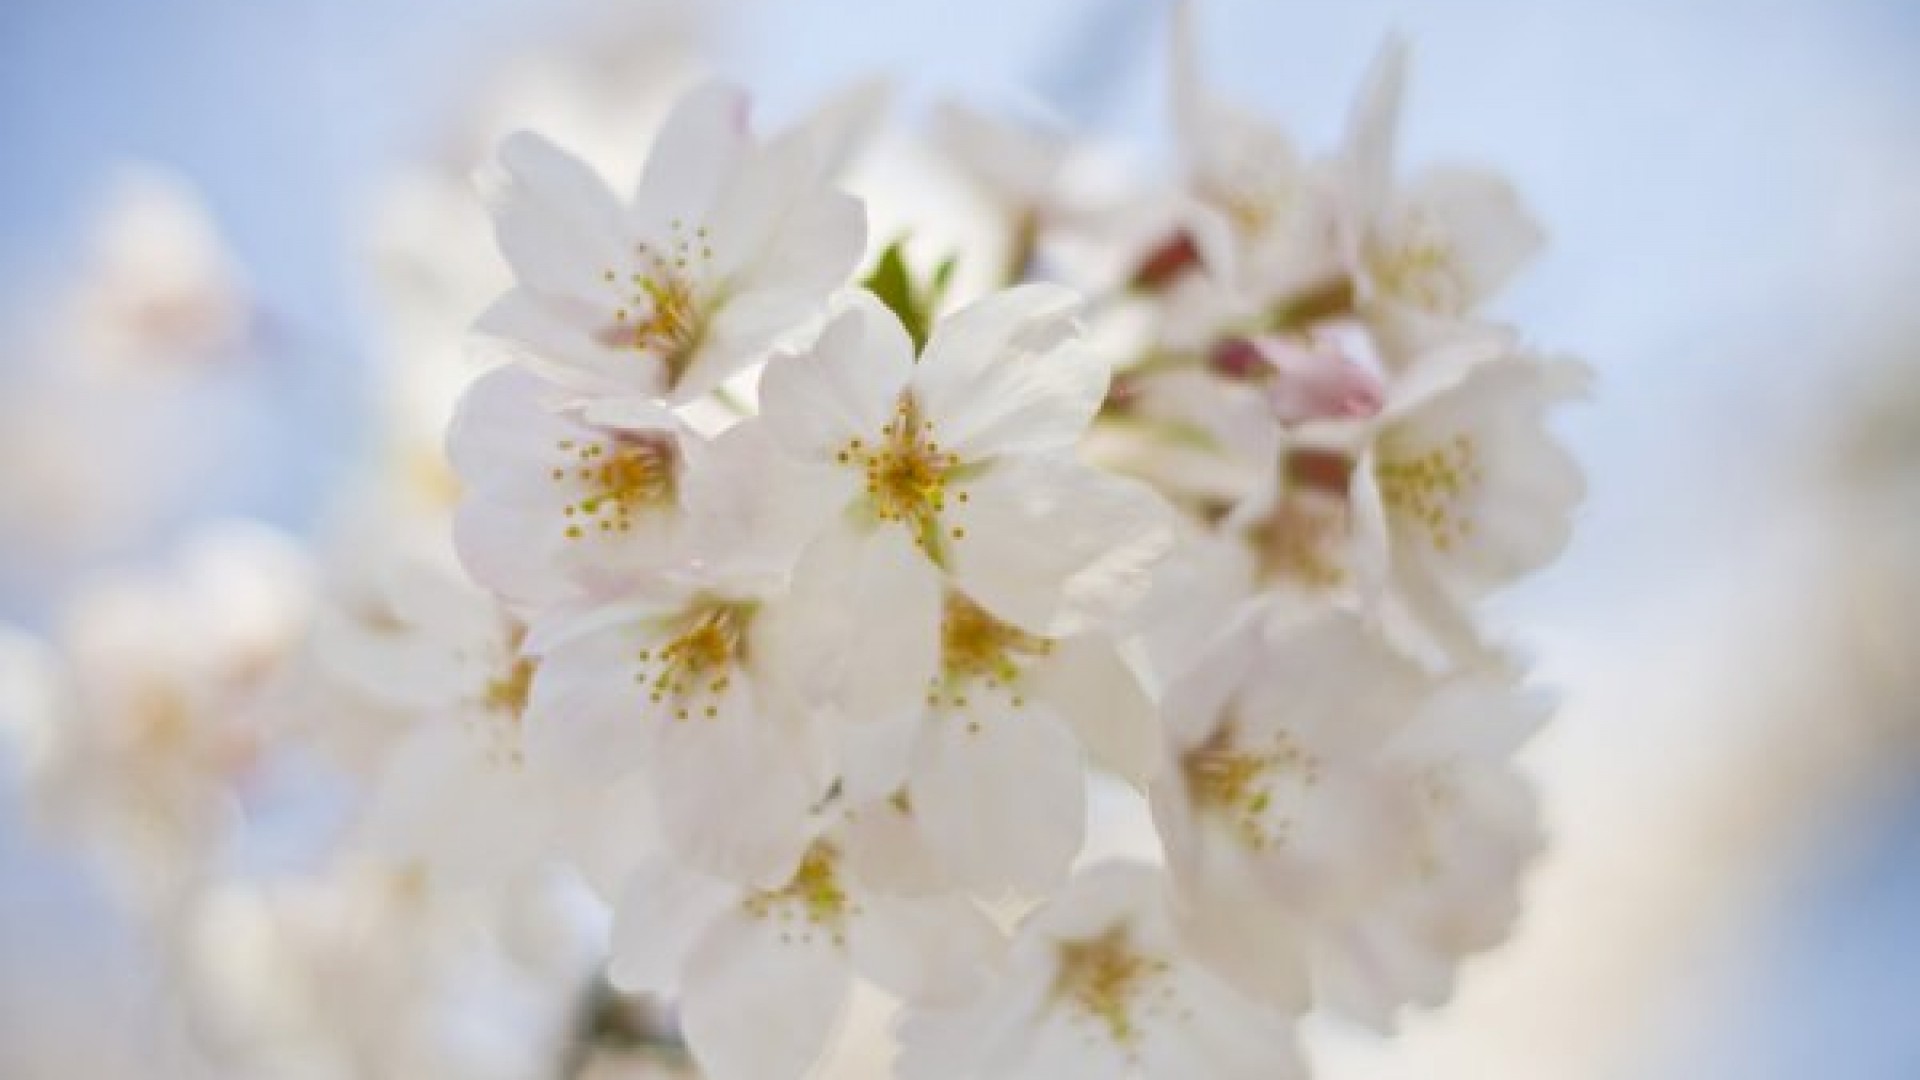 Tsunashima Cherry Blossom Festival